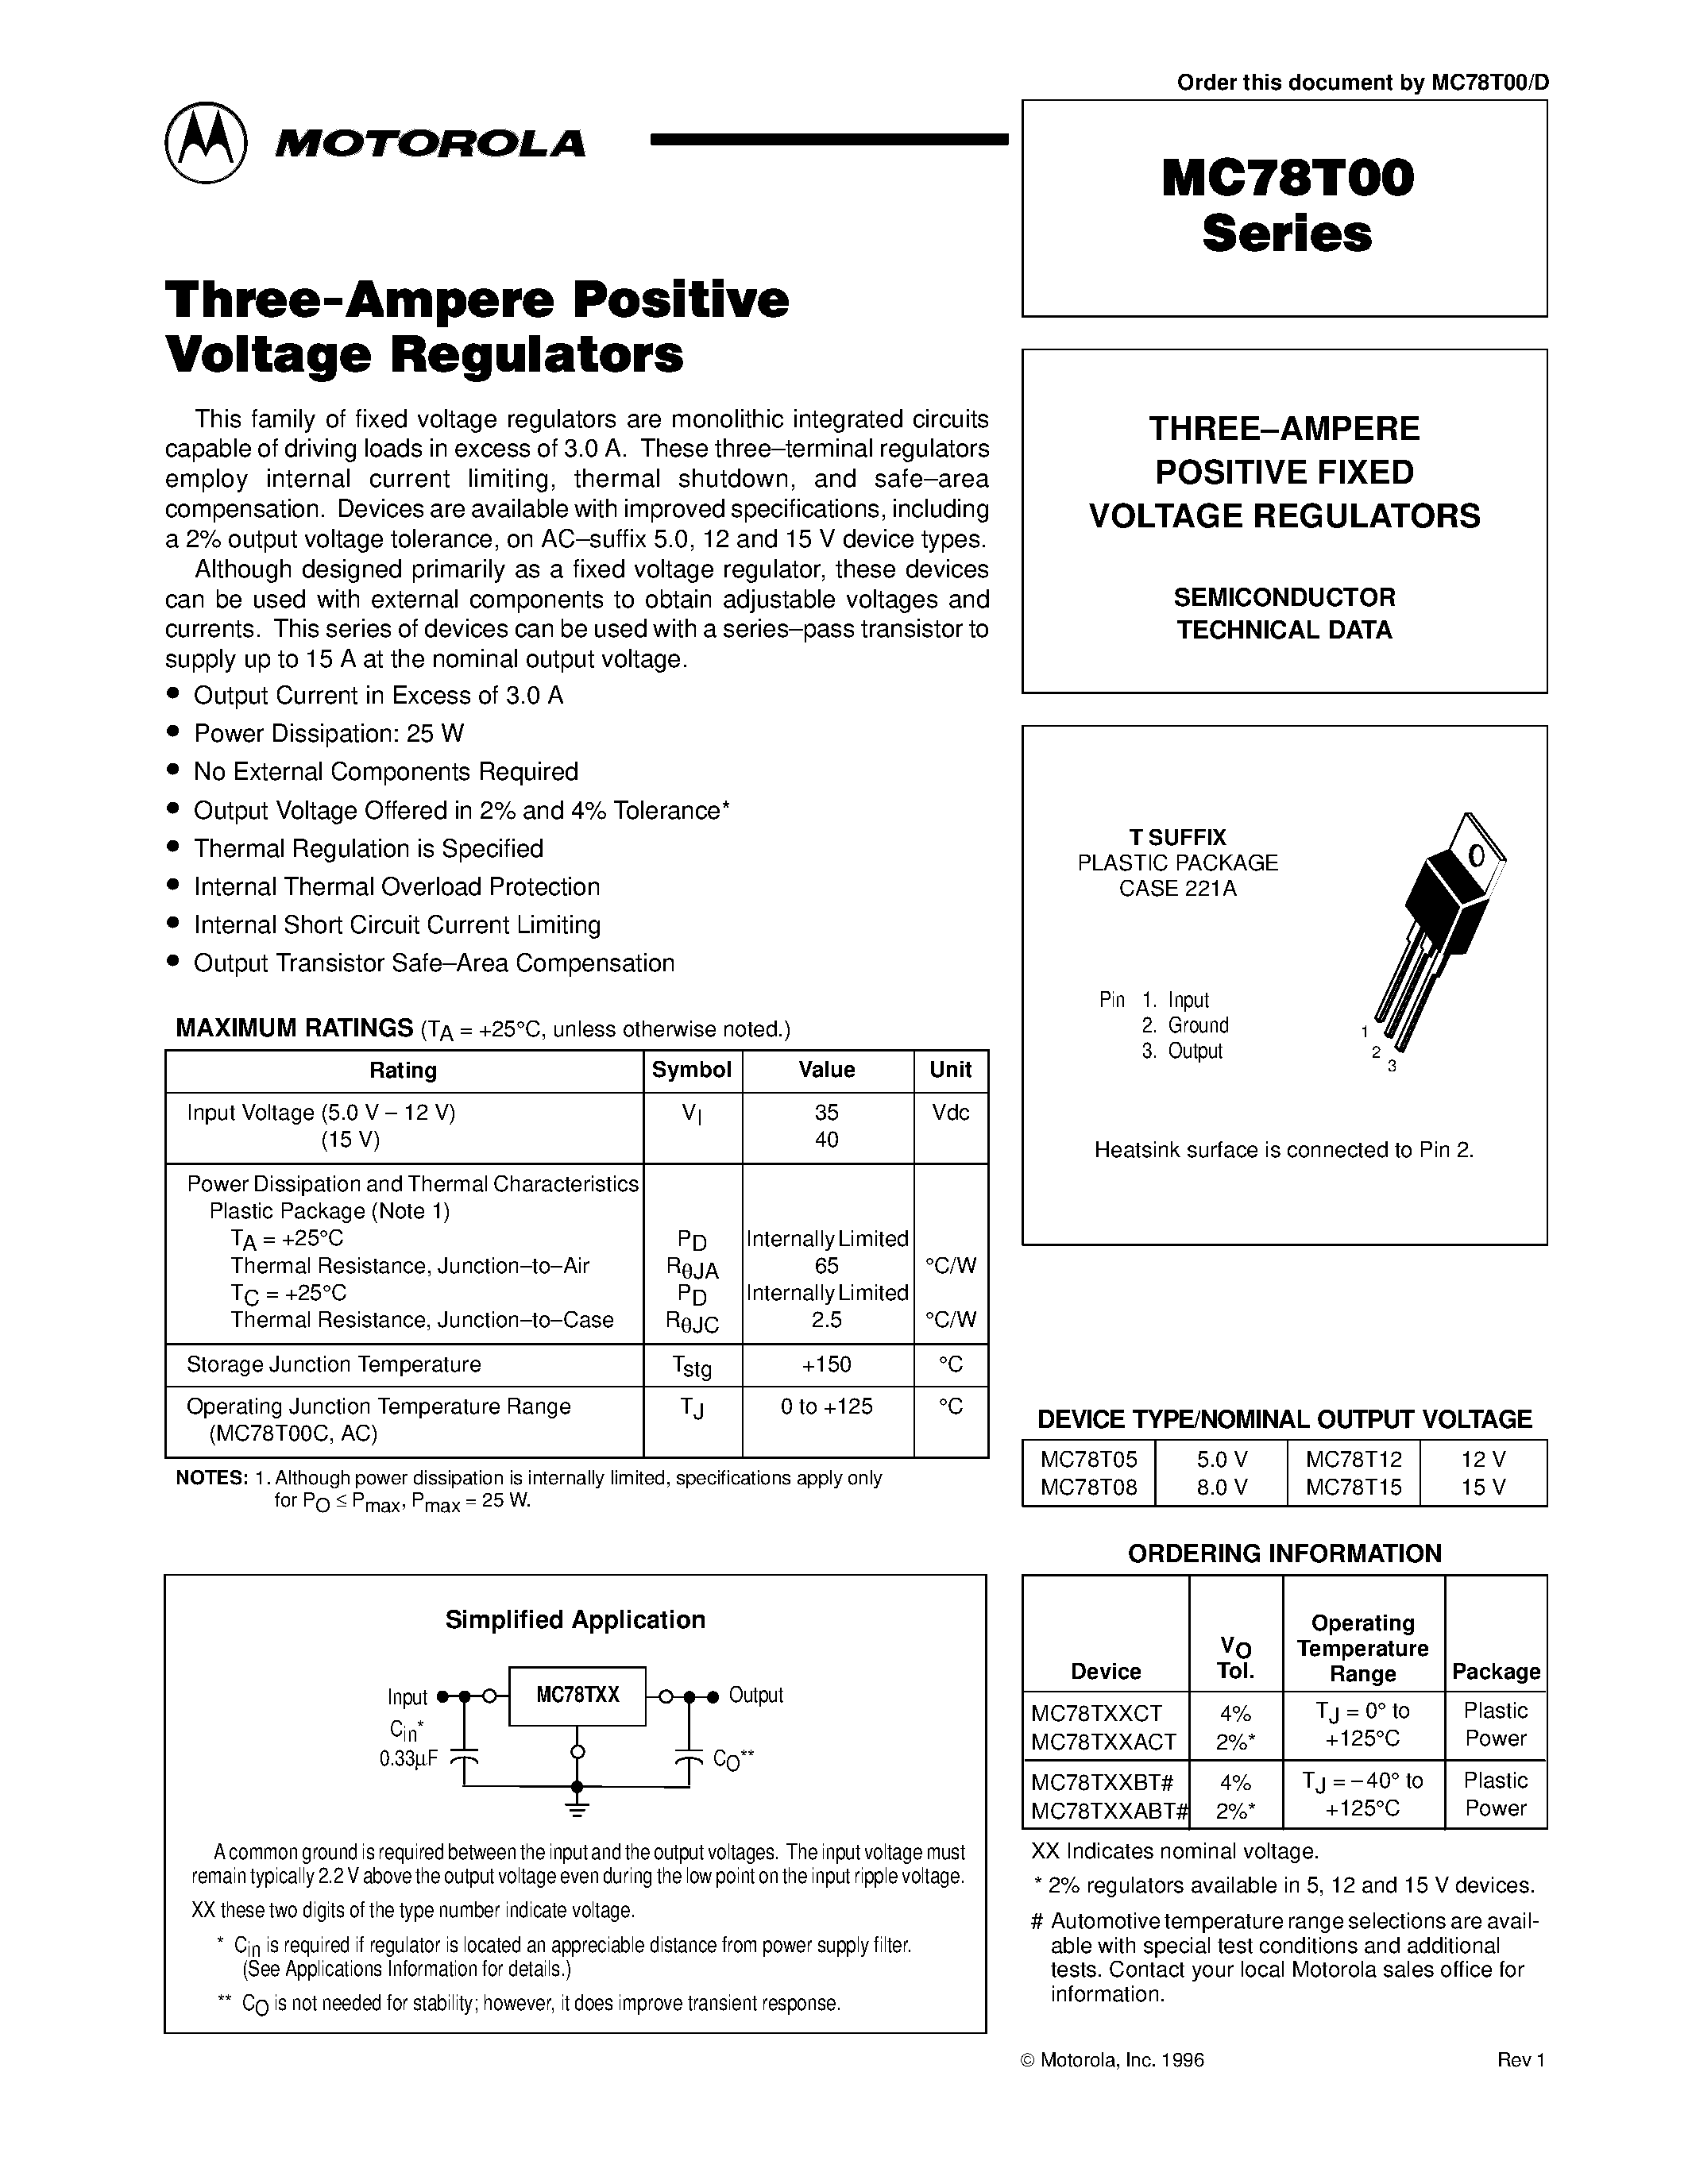 Datasheet MC78T12ABT - THREE-AMPERE POSITIVE FIXED VOLTAGE REGULATORS page 1